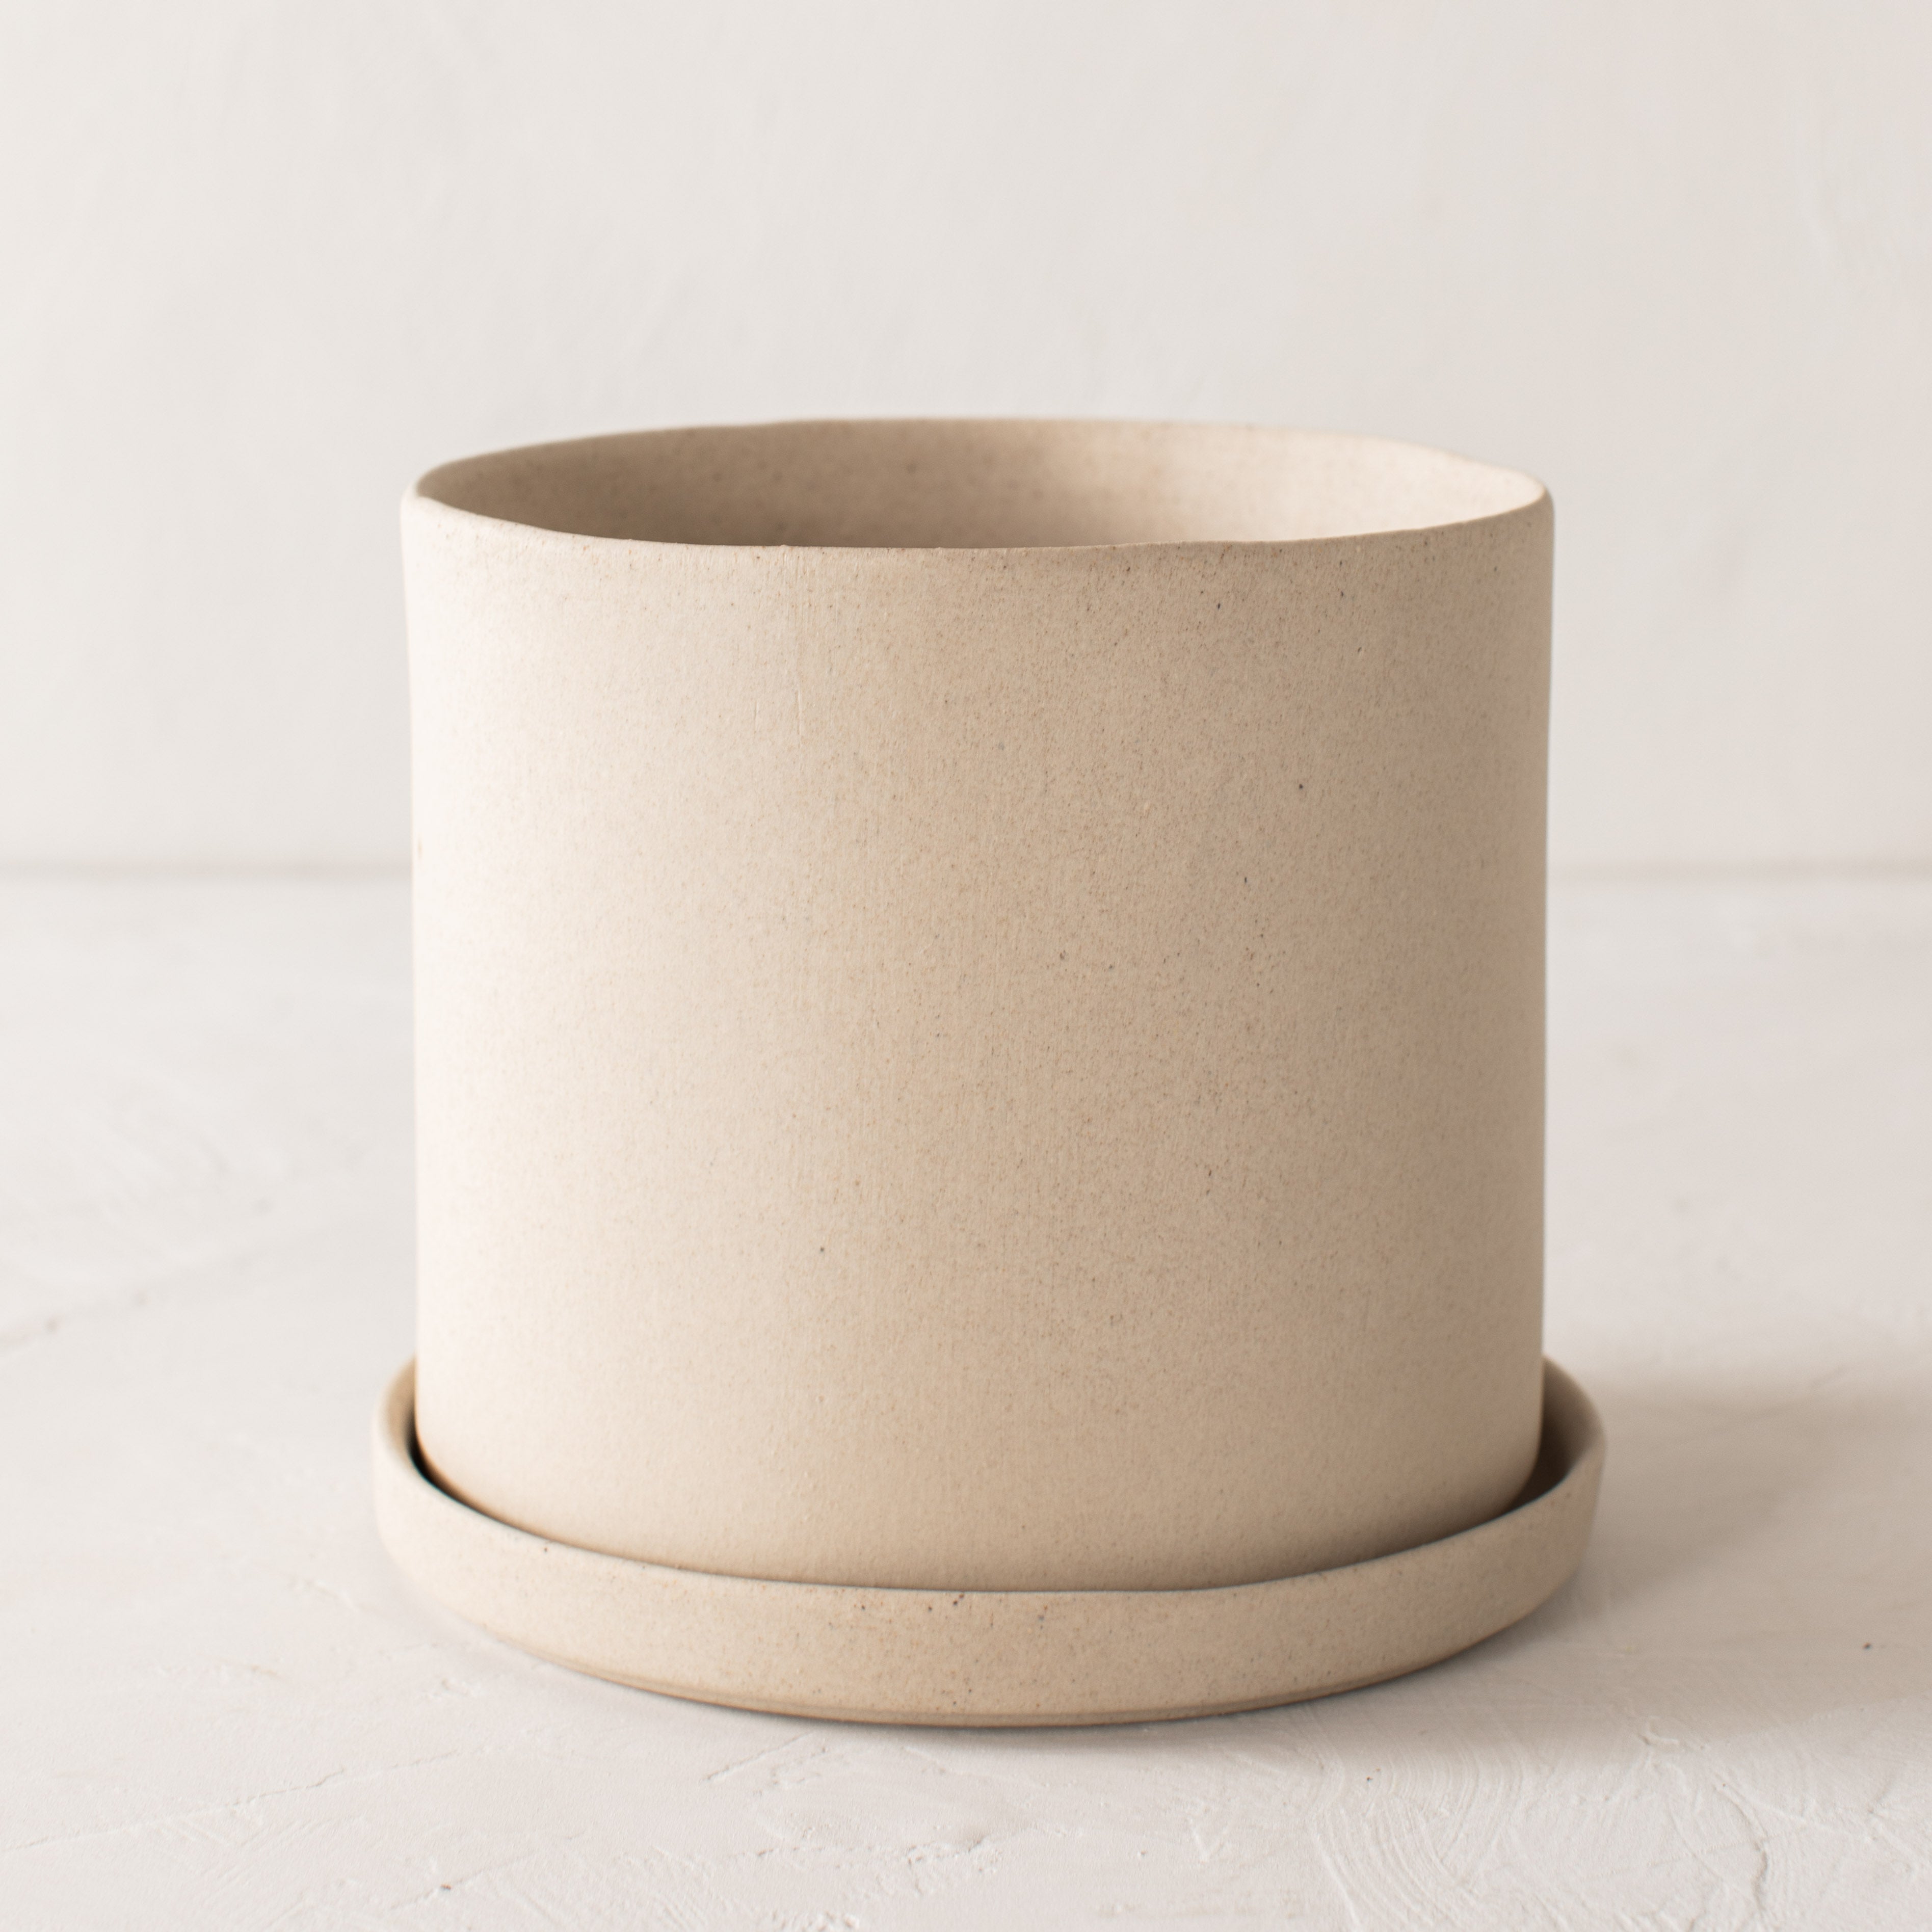 Stoneware minimal ceramic planter with bottom drainage dish. Handmade stoneware ceramic planter, designed and sold by Convivial Production, Kansas City ceramics.